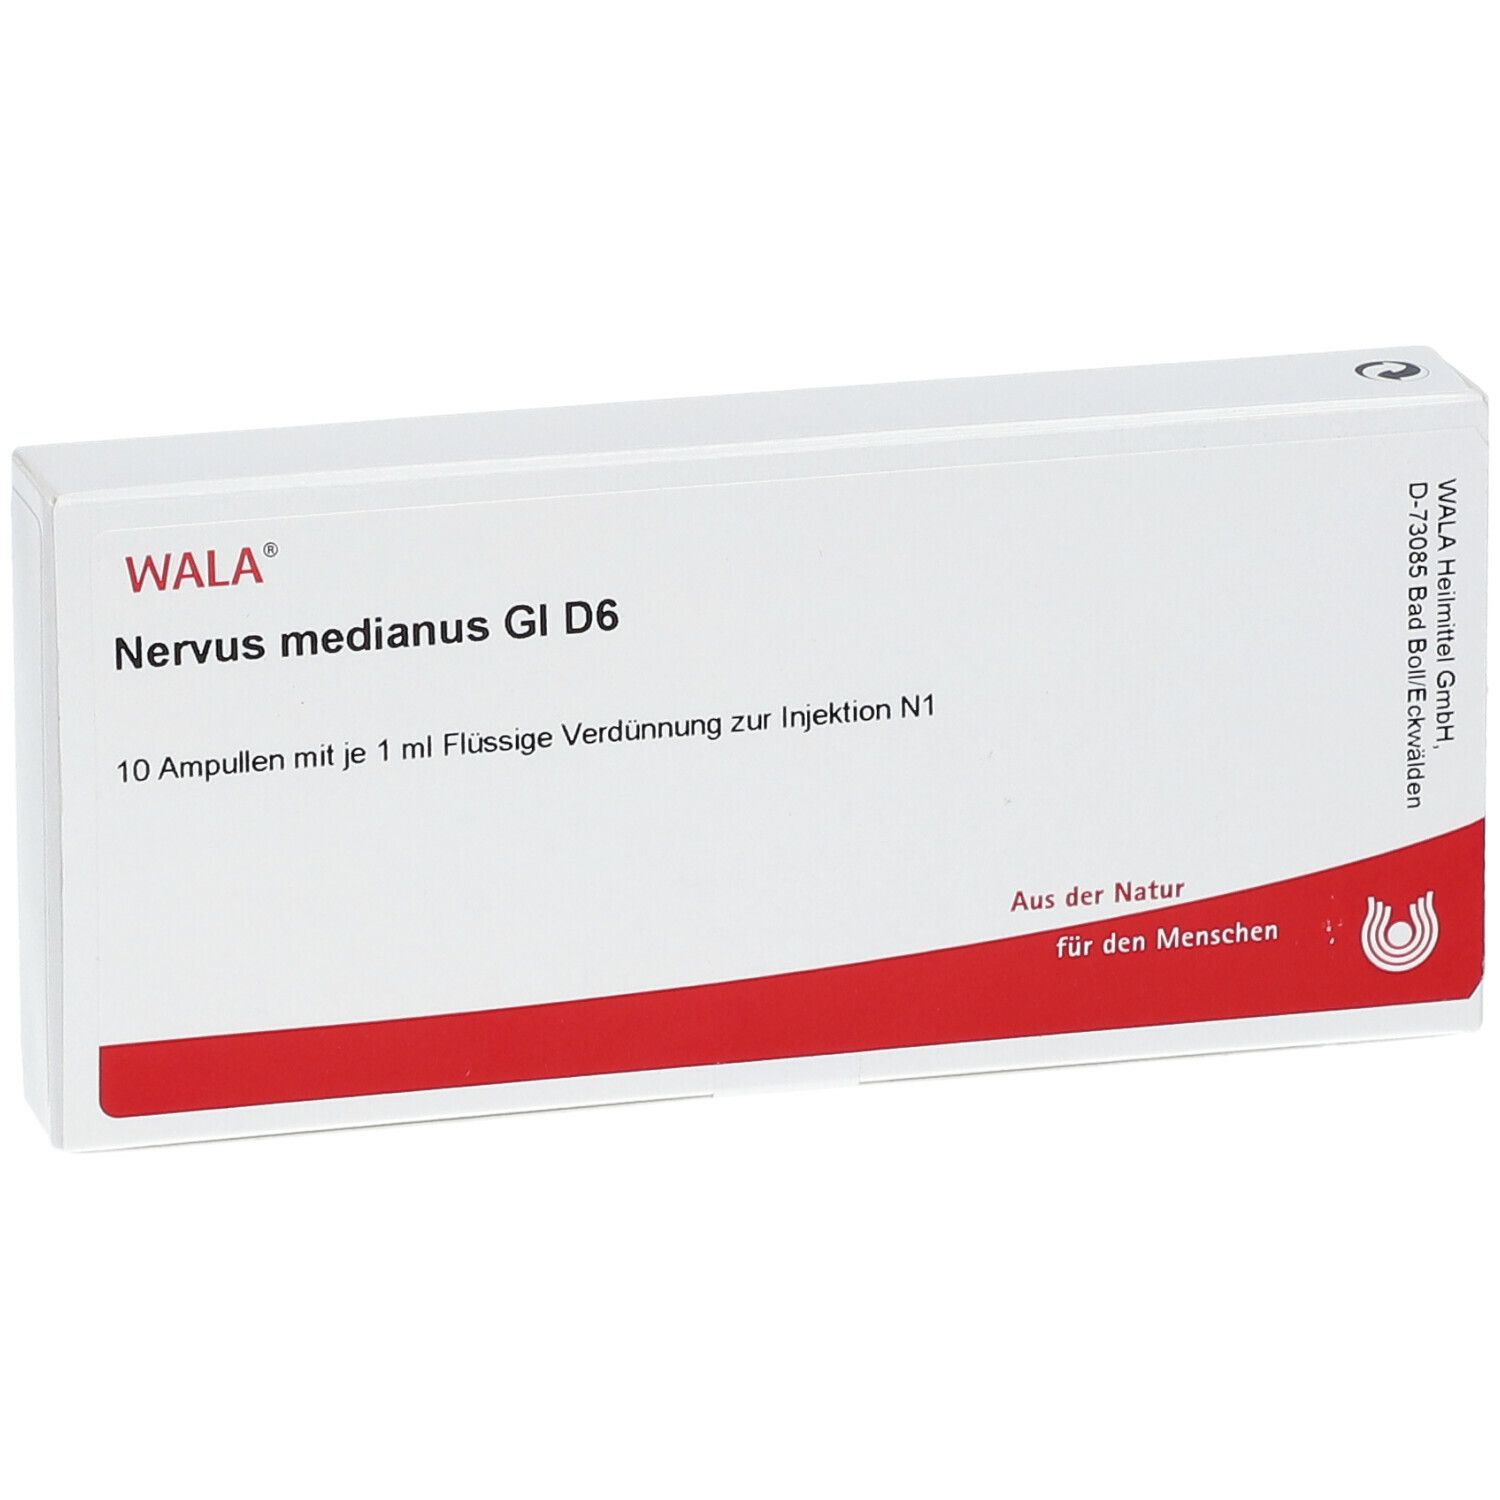 WALA® Nervus medianus Gl D 6